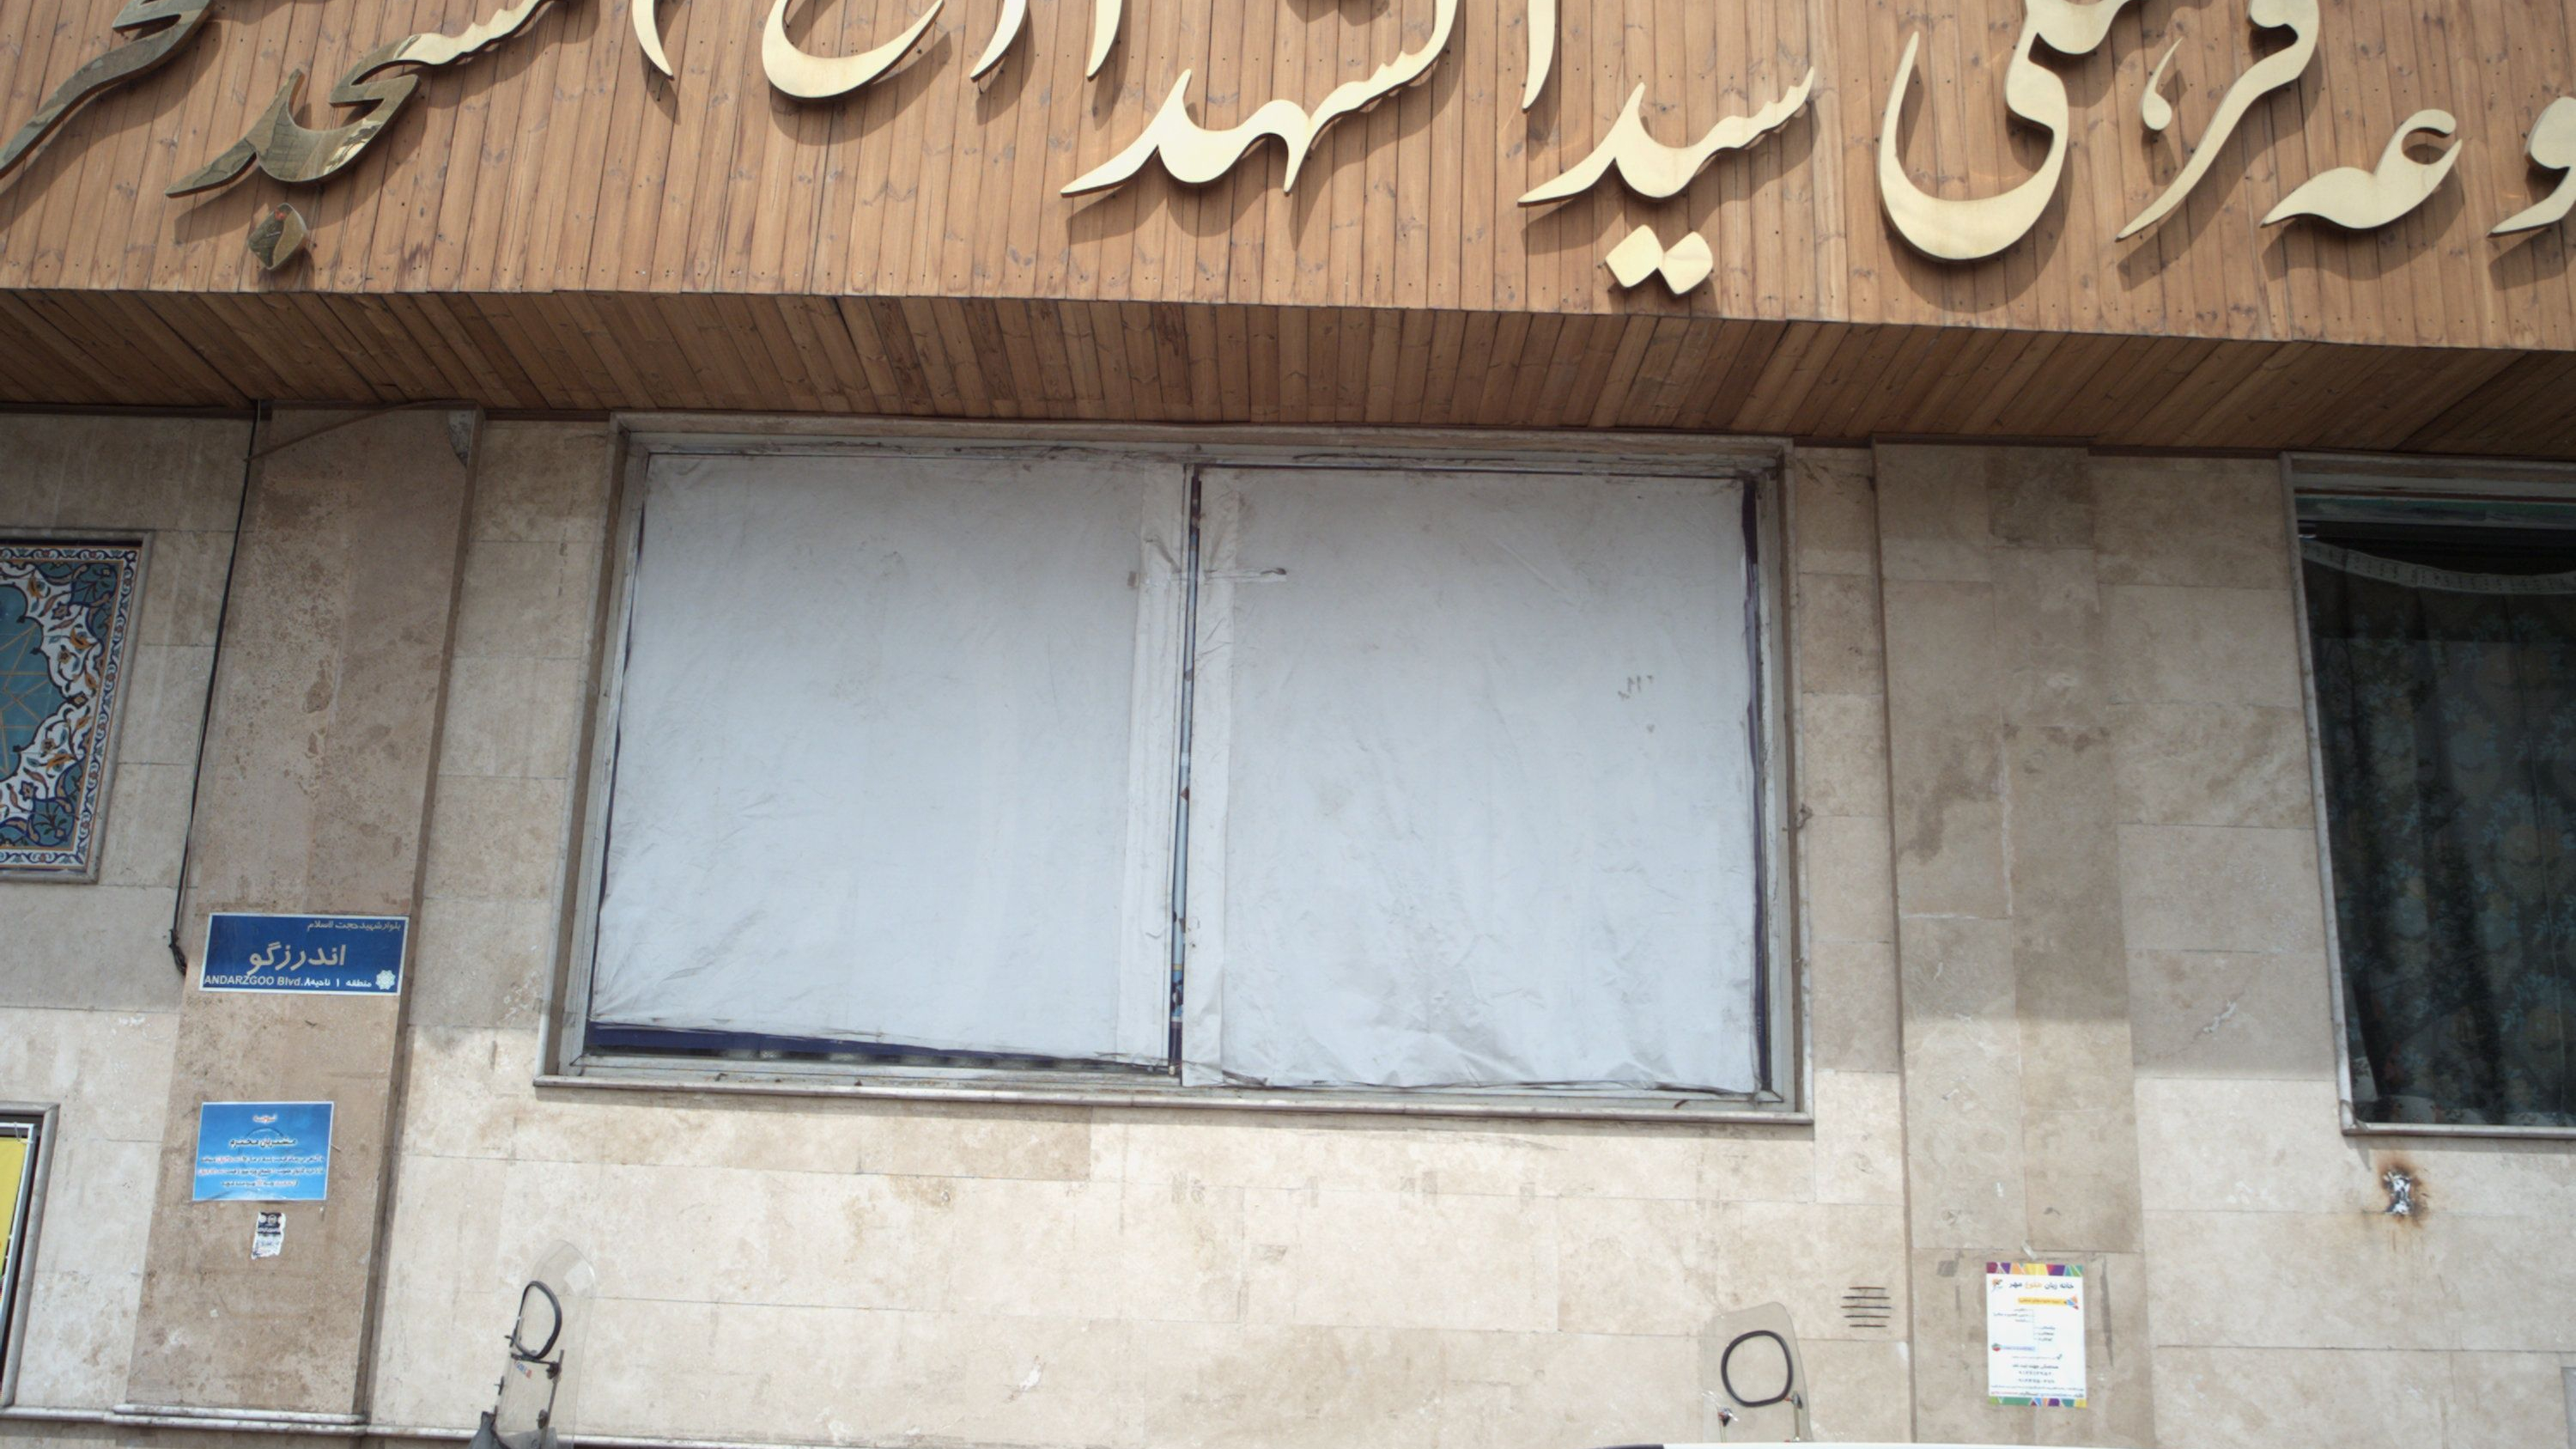 مجموعه فرهنگی سیدالشهدا علیه السلام مسجد مفتخر